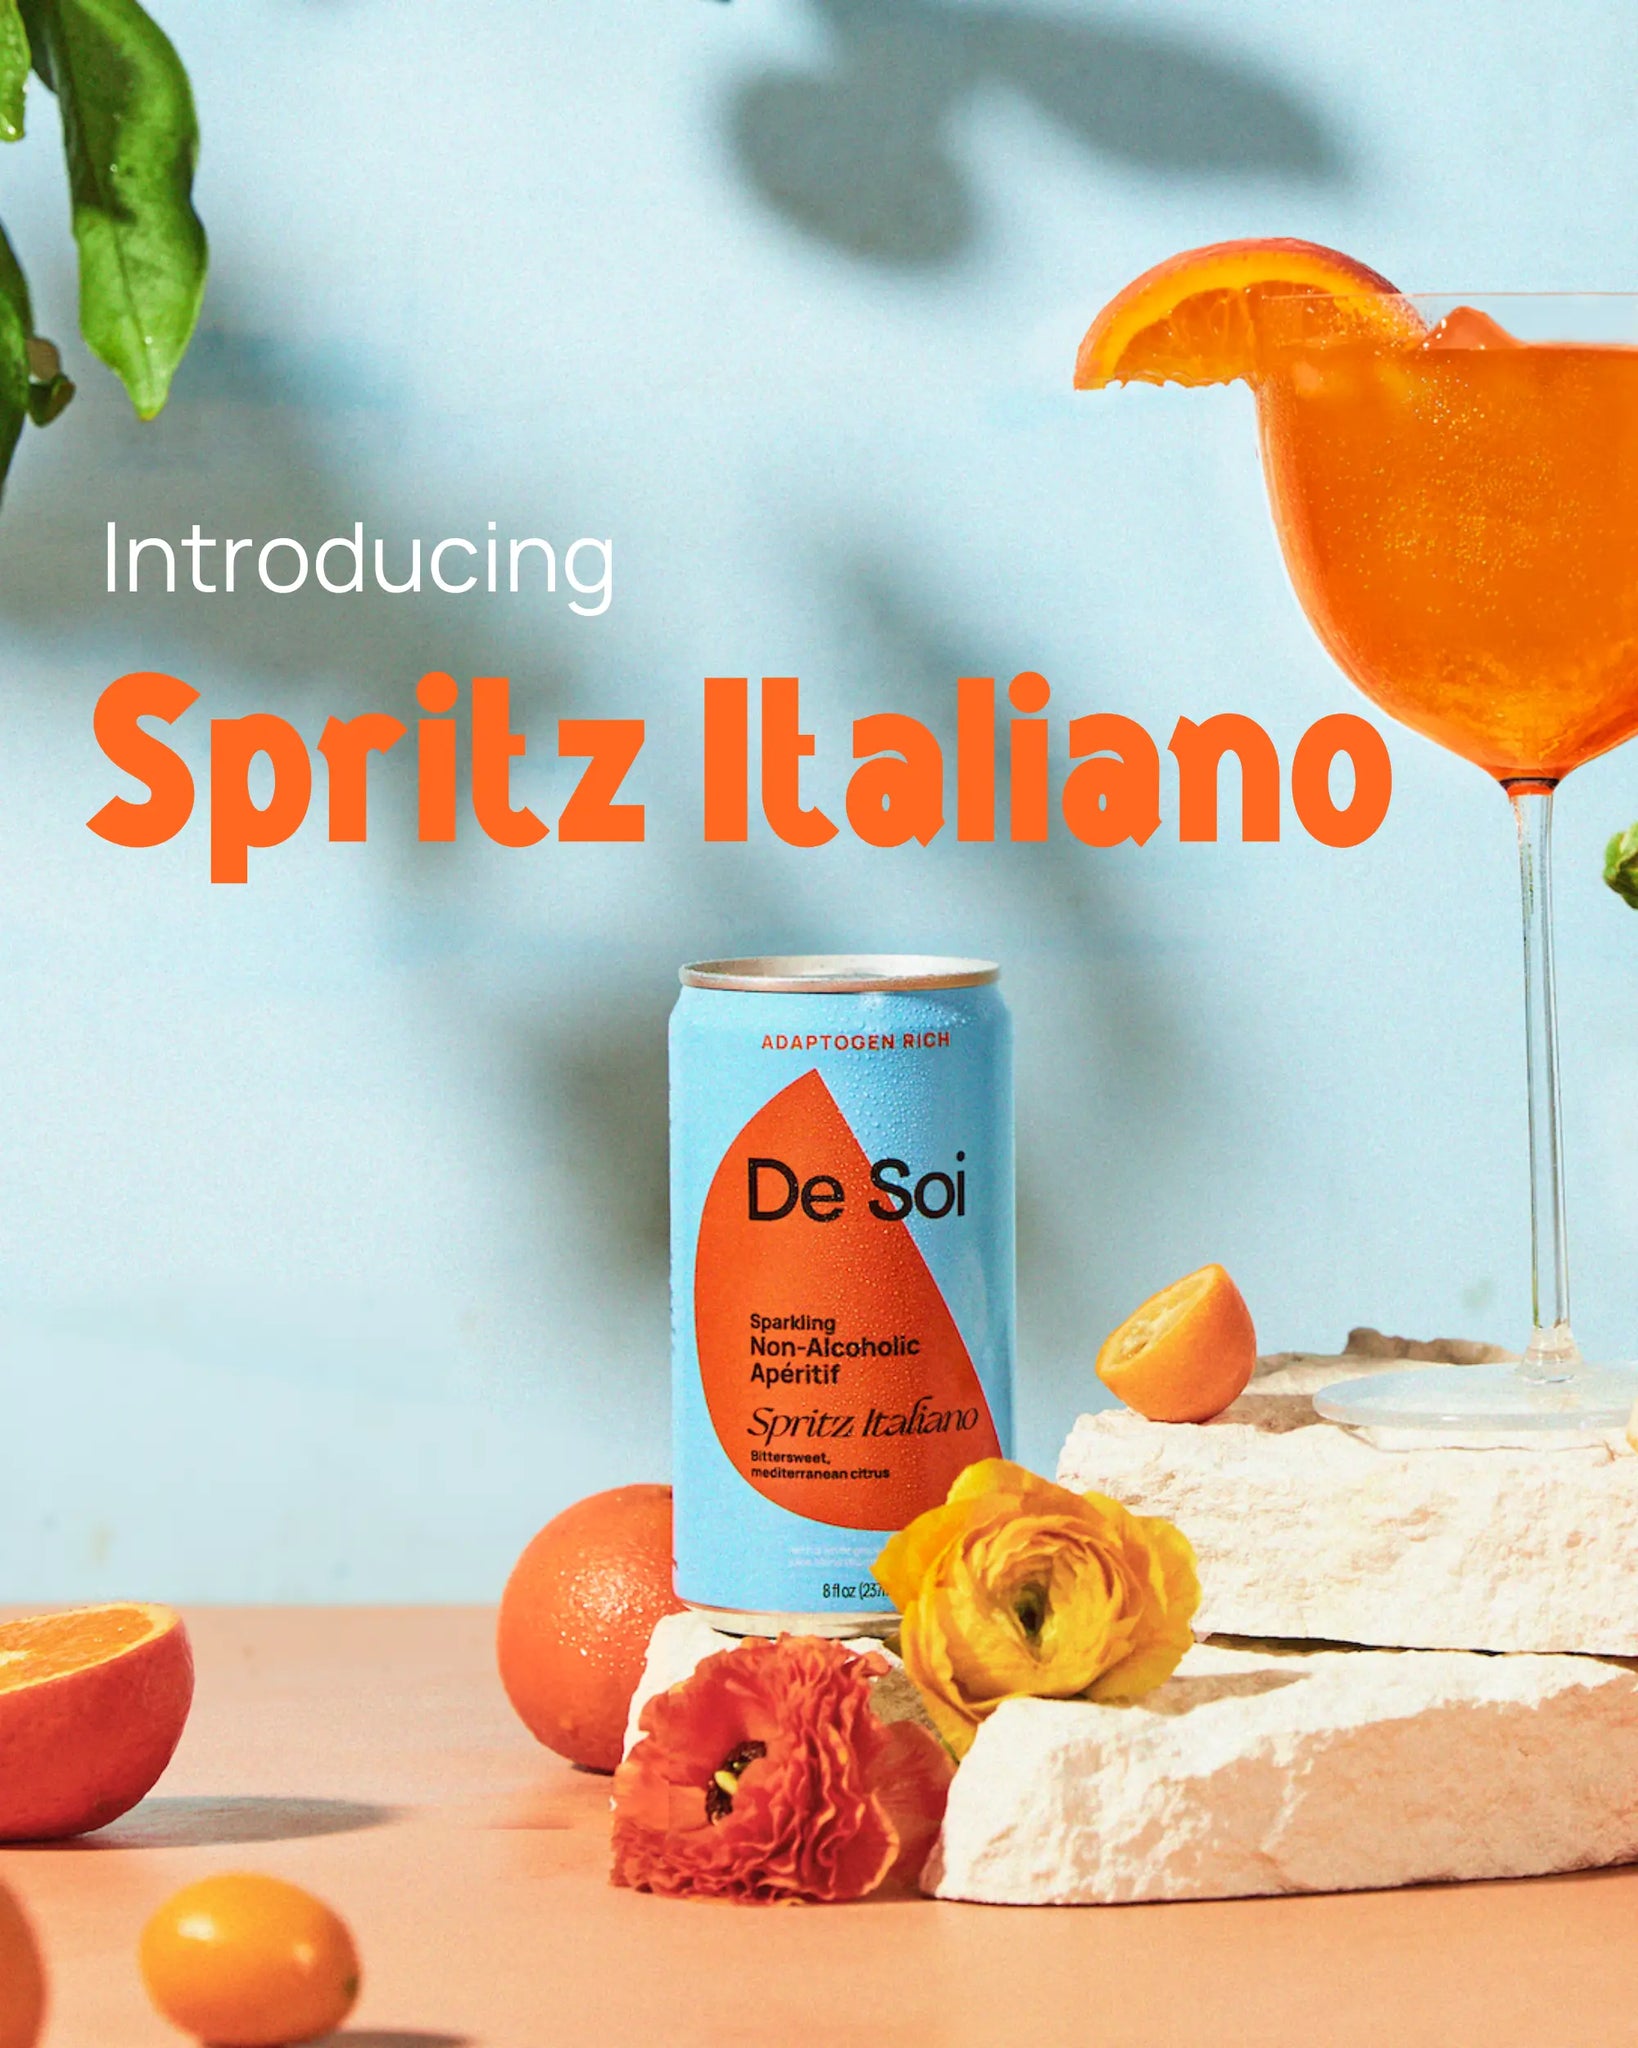 De Soi Sparkling Non-Alcoholic Aperitif Spritz Italiano